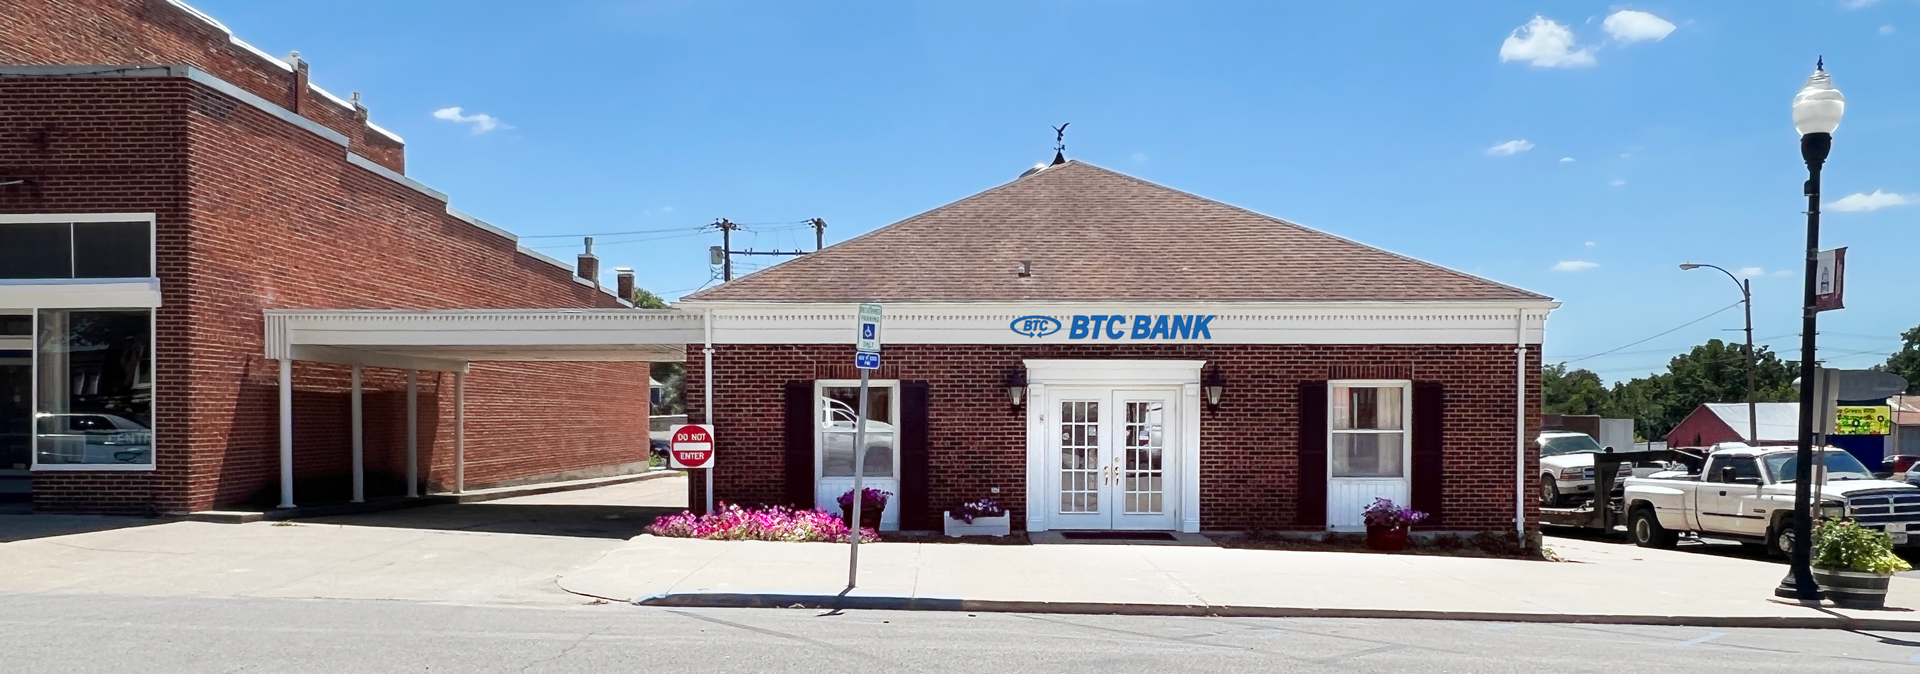 BTC Bank Fayette, Missouri photo of branch building